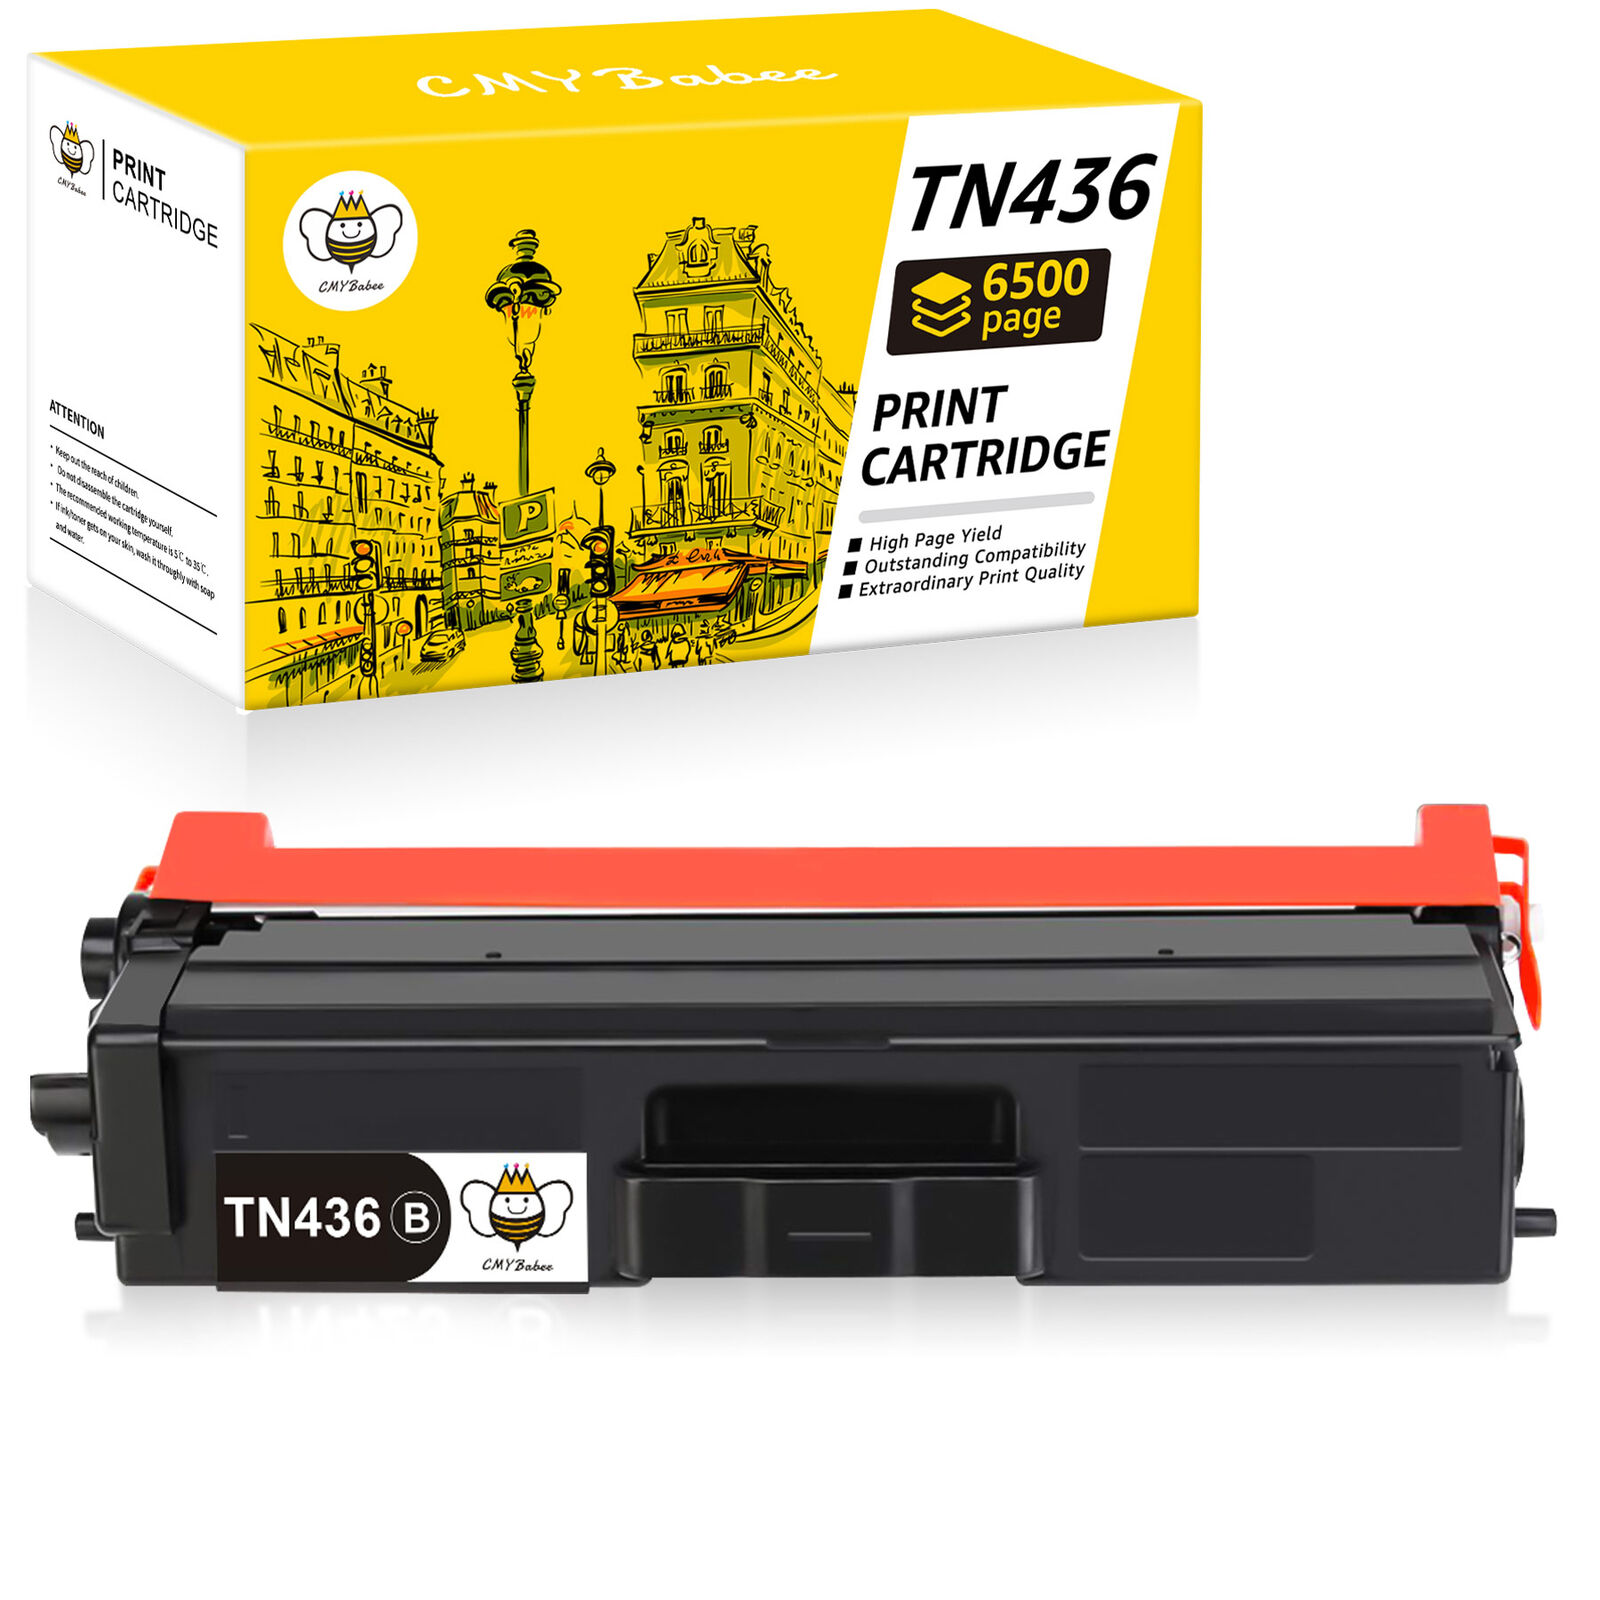 TN436 Toner Cartridge replacement for Brother TN433 HL-L8360CDW MFC-L8900CDW Lot